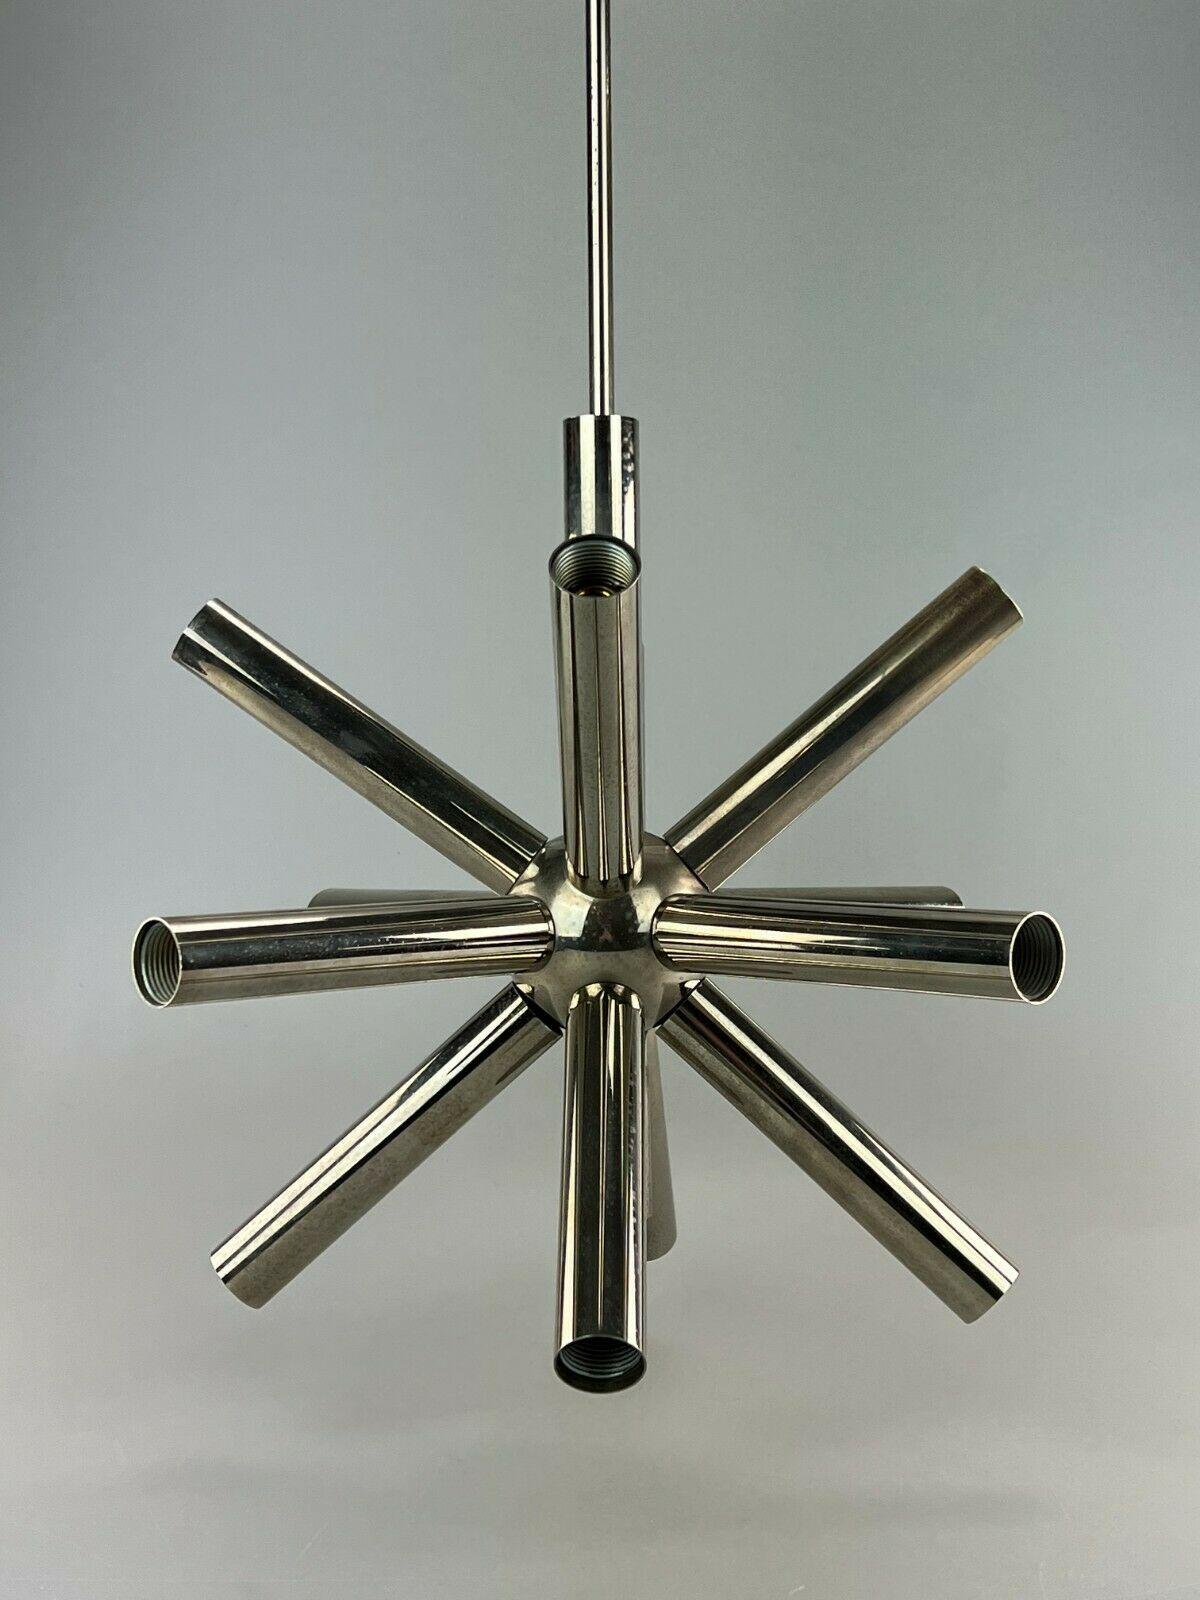 60s 70s Sputnik ceiling lamp hanging lamp Sciolari chrome Space Age Design 60s 70s

Object: ceiling lamp

Manufacturer: Sciolari

Condition: good - vintage

Age: around 1960-1970

Dimensions:

Diameter = 40cm
Height = 70cm

Other